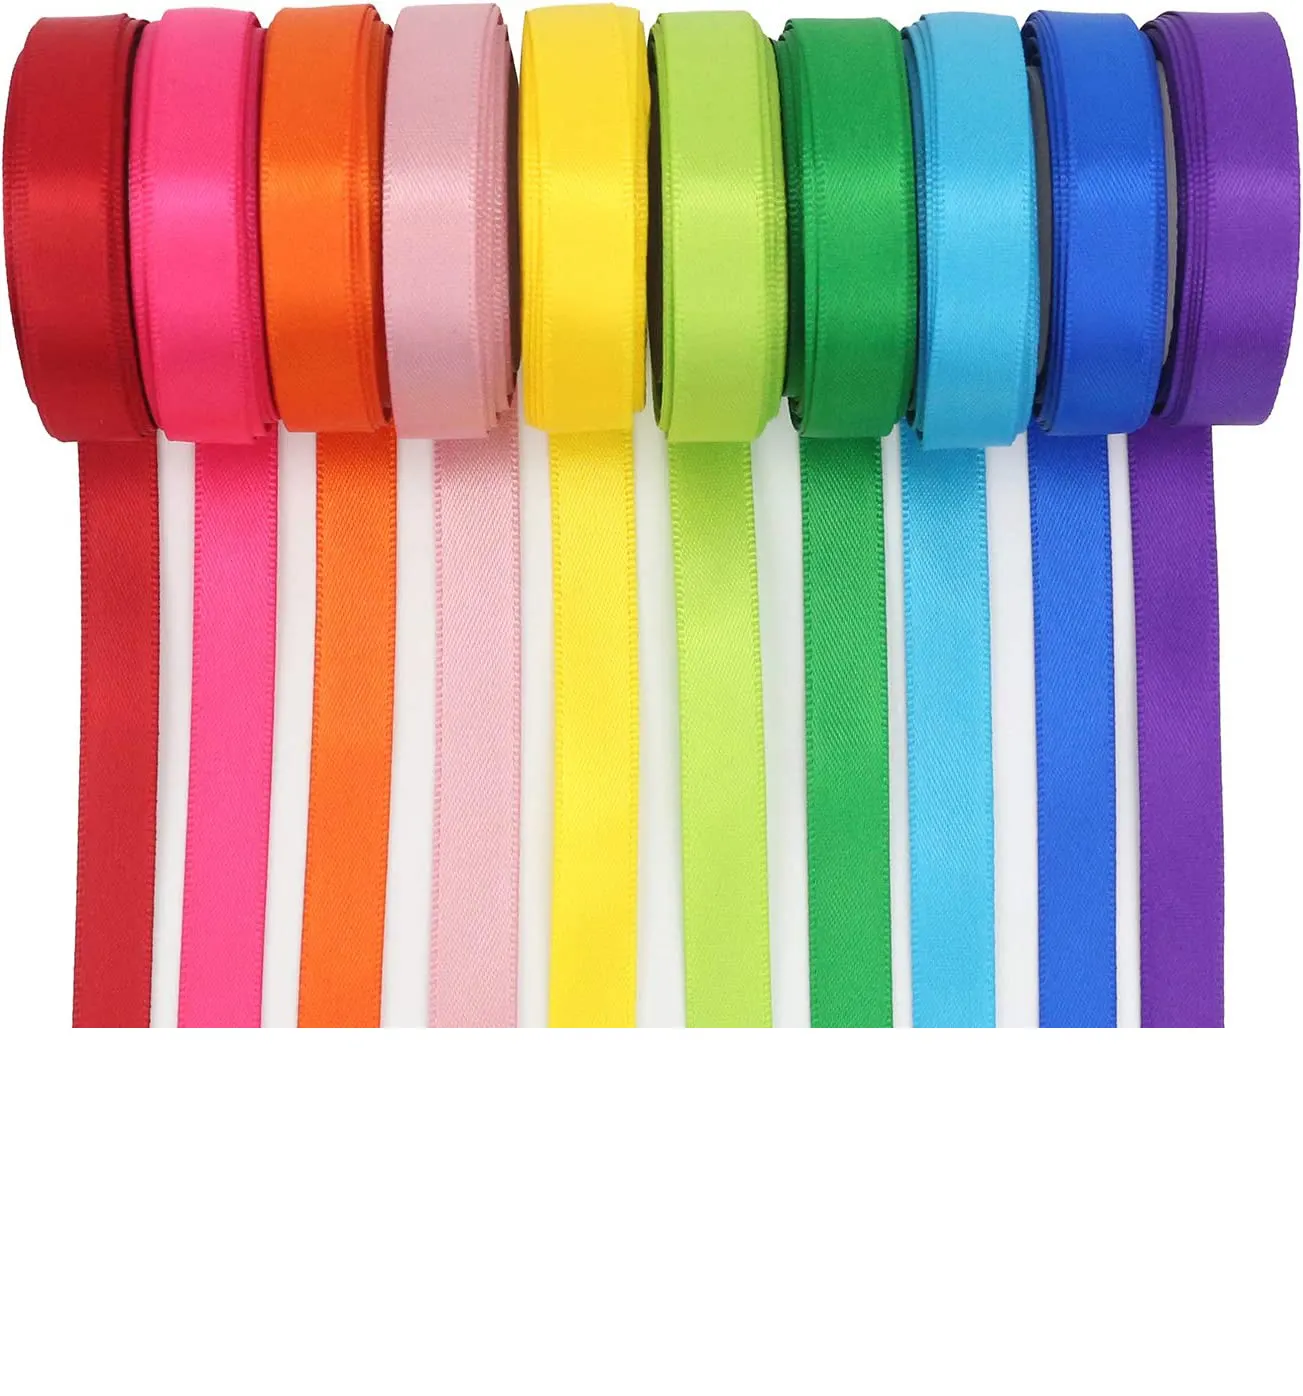 Rainbow Colored Printed Ribbon Pastel Assortment Satin Ribbon 3/8" Inch 50 Yards Pastel Ribbons for Gift Wrap